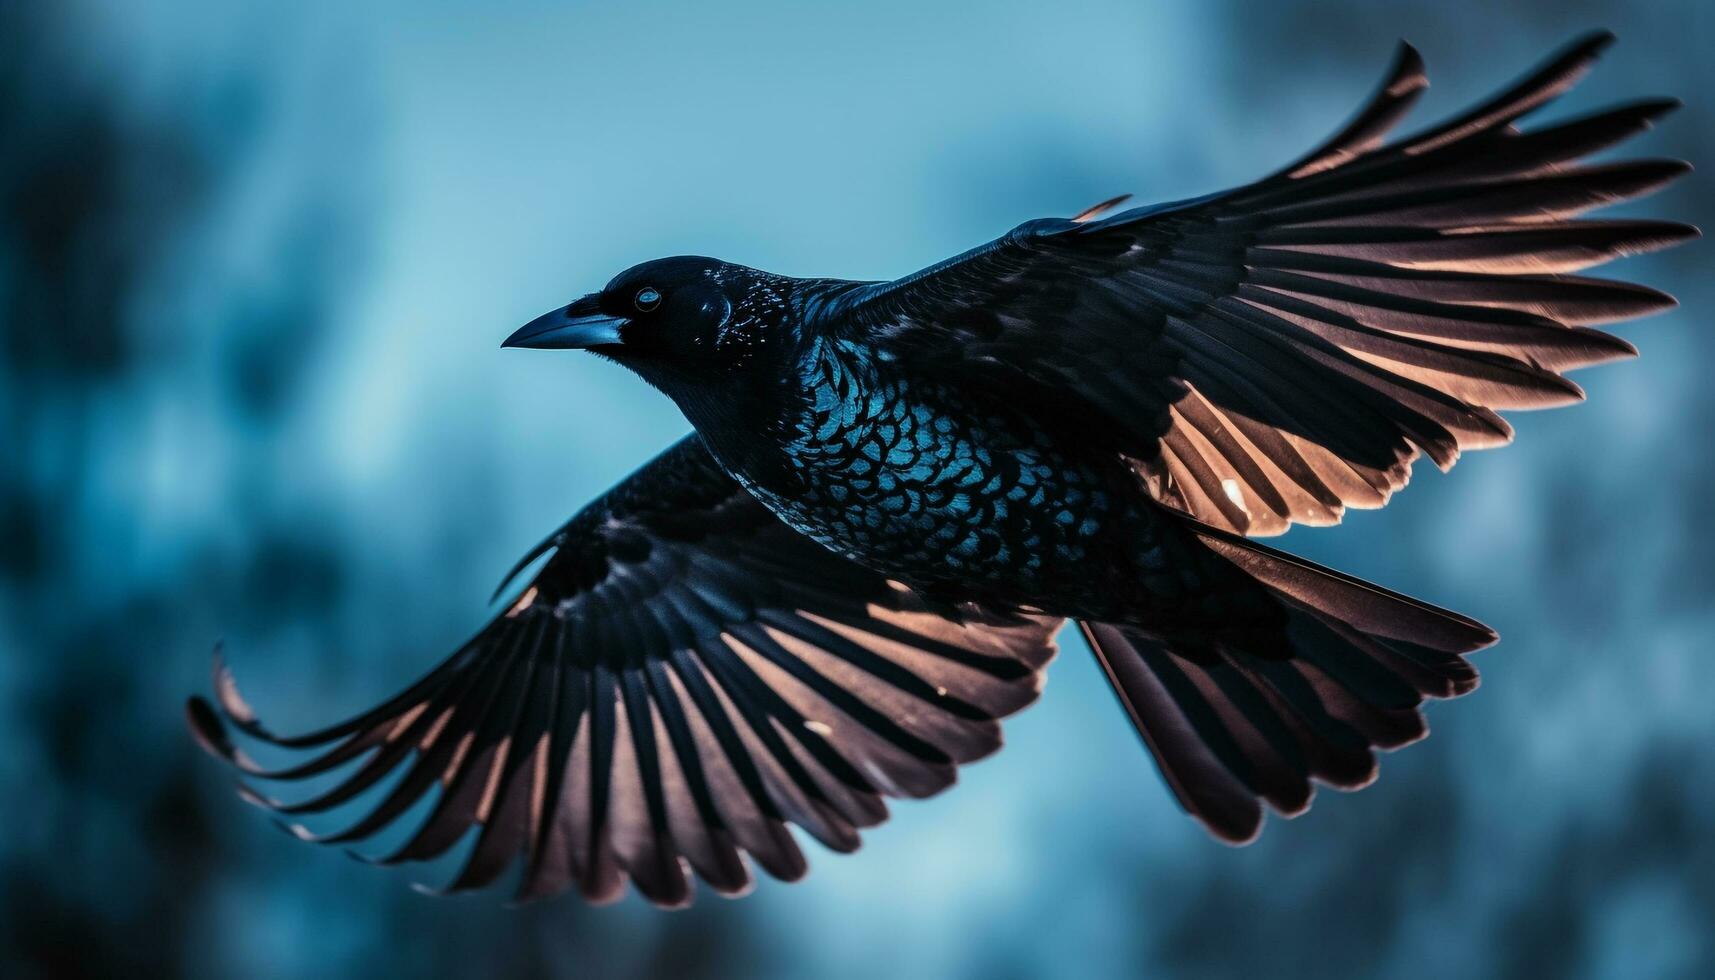 Spread wings, dark hawk perching on snowy tree branch generated by AI photo